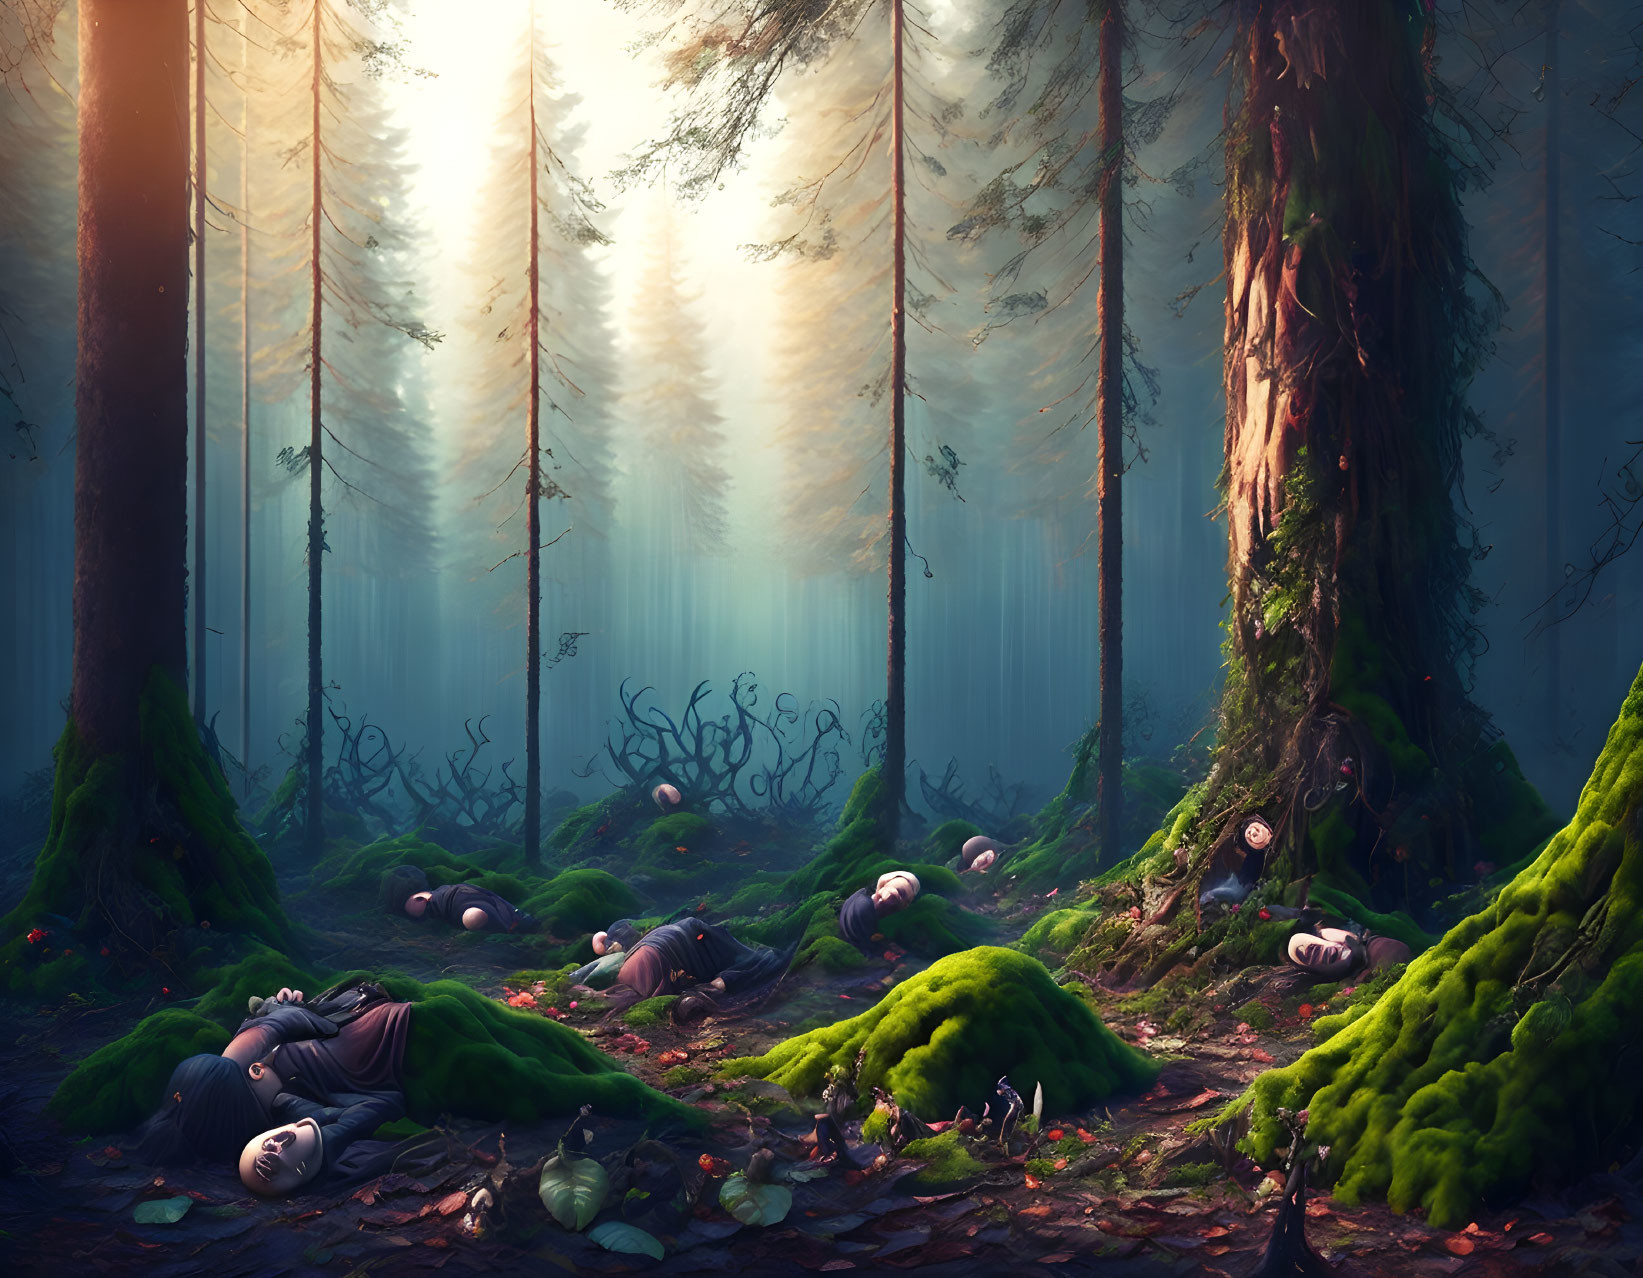 Enchanting forest landscape with spiraled snails and mist